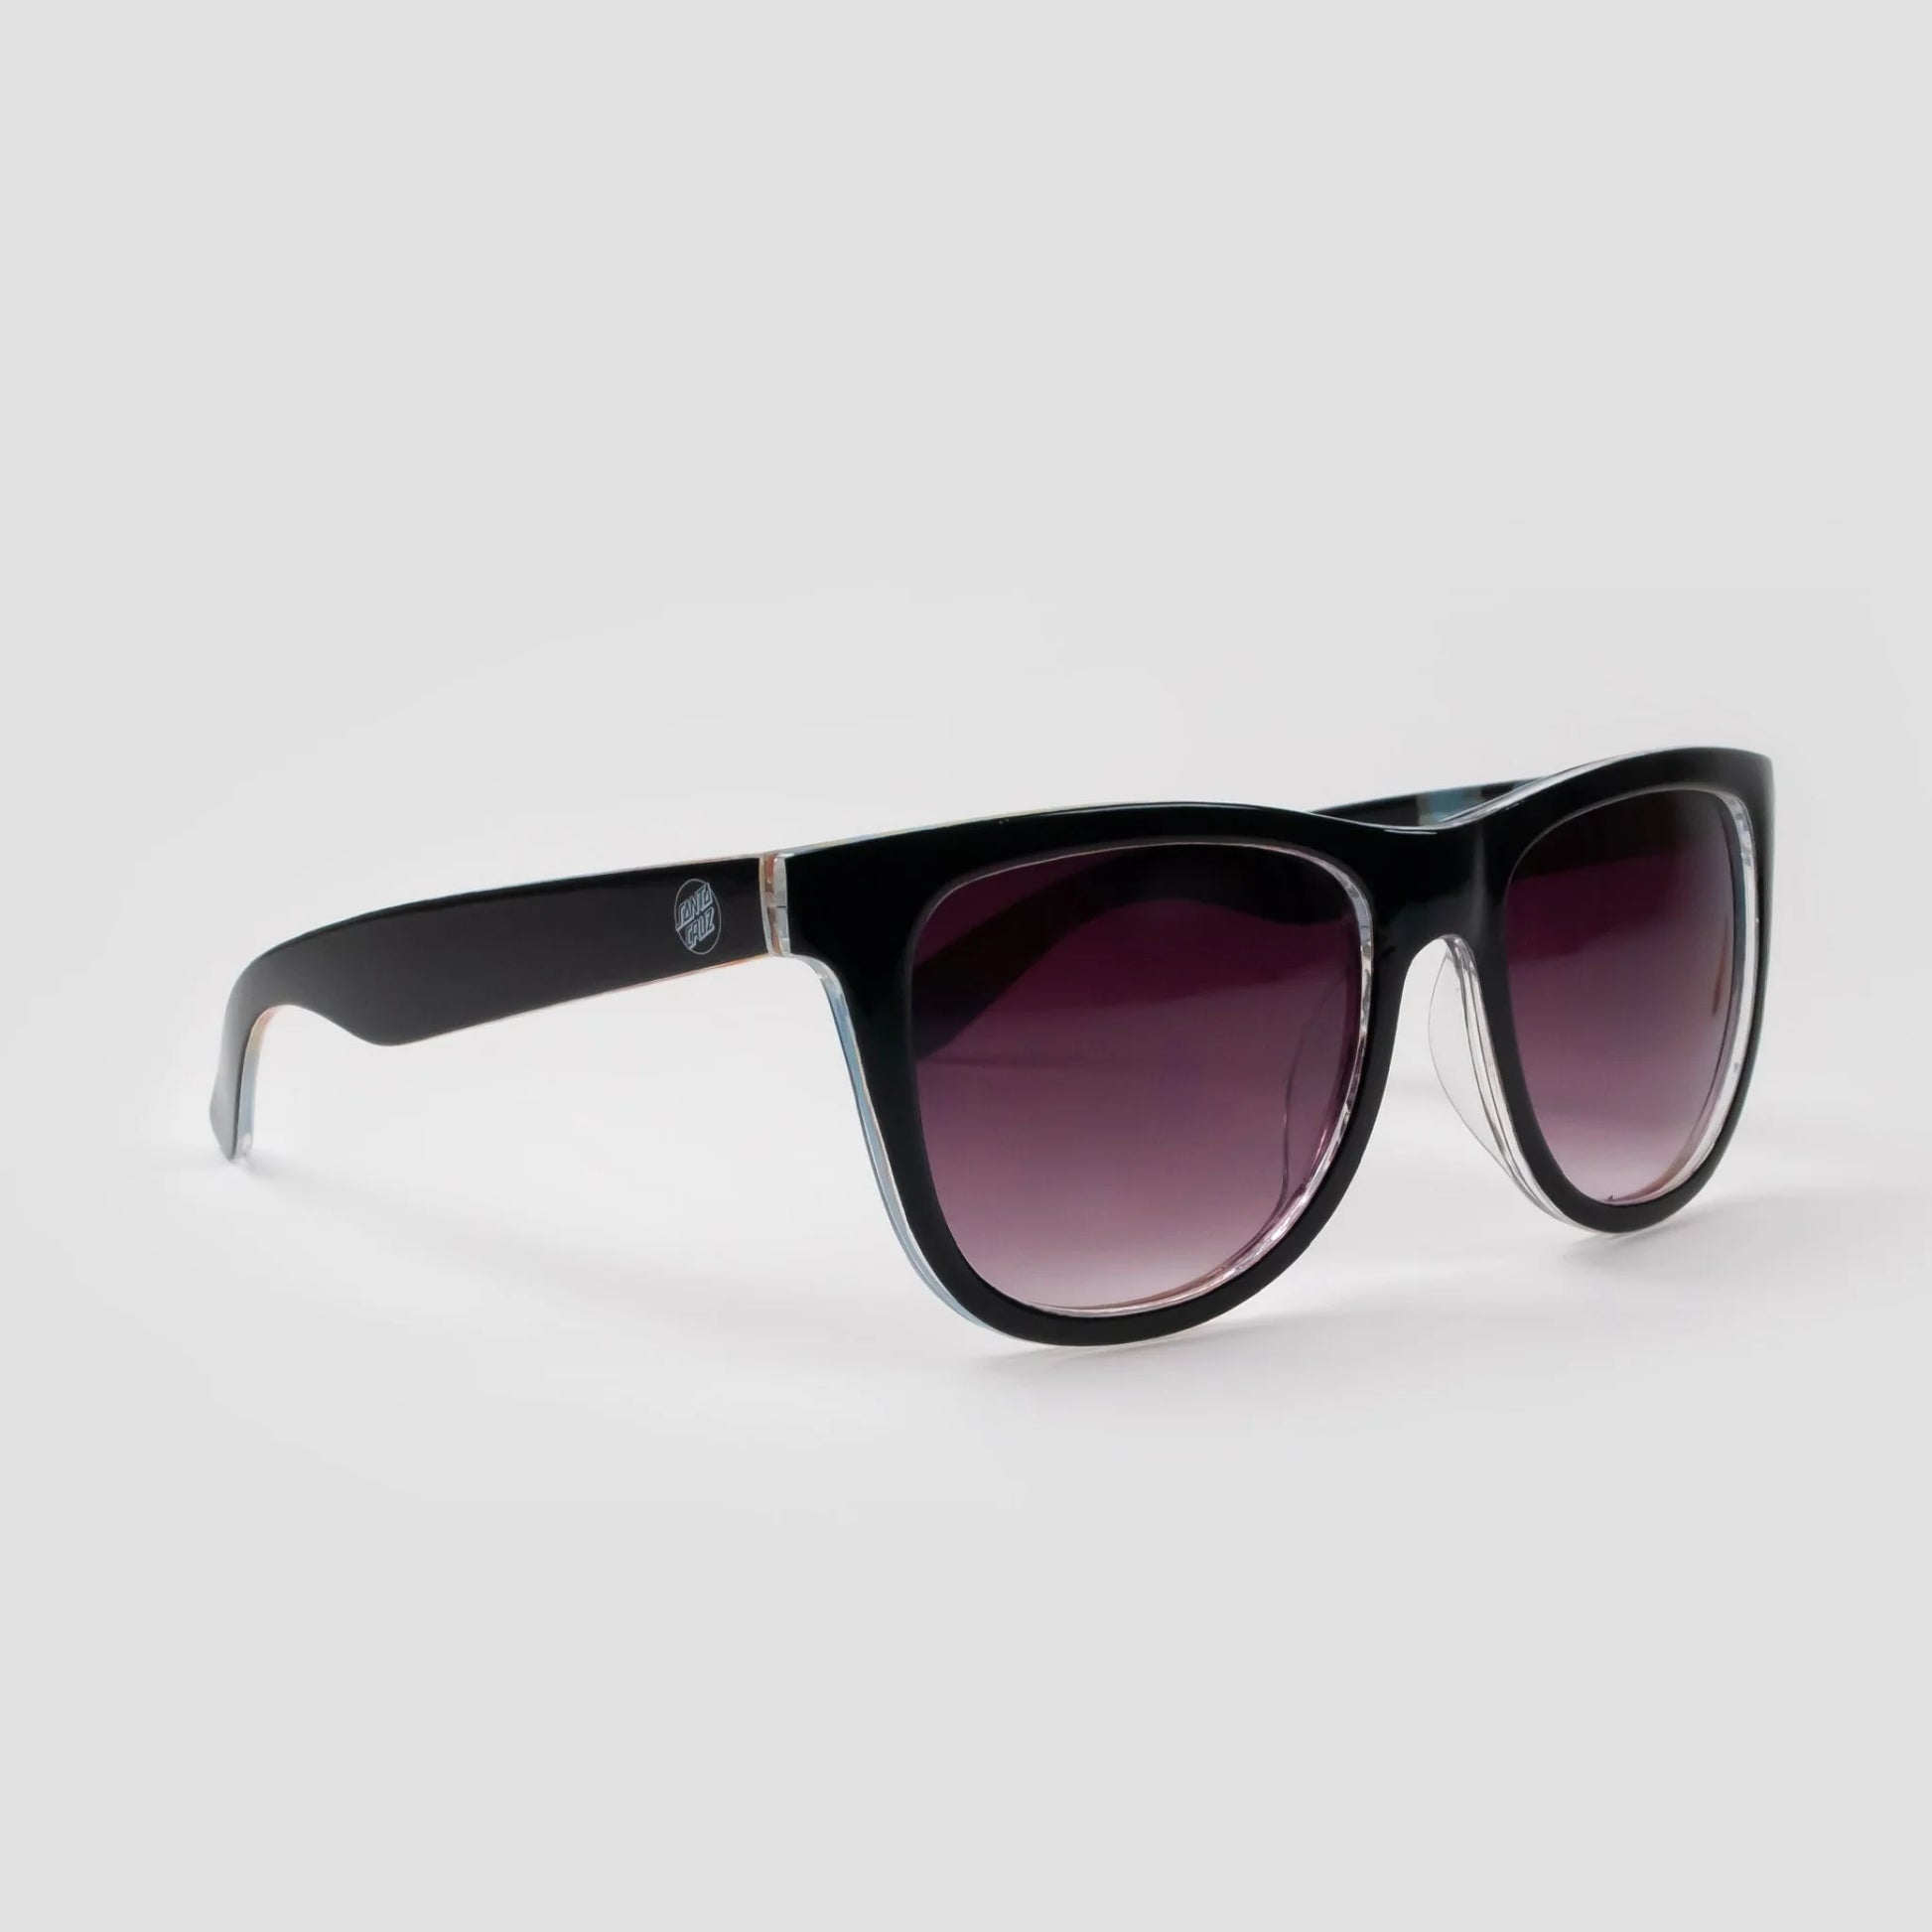 Santa Cruz Opus Dot Sunglasses - Black/Black Rainbow - Prime Delux Store